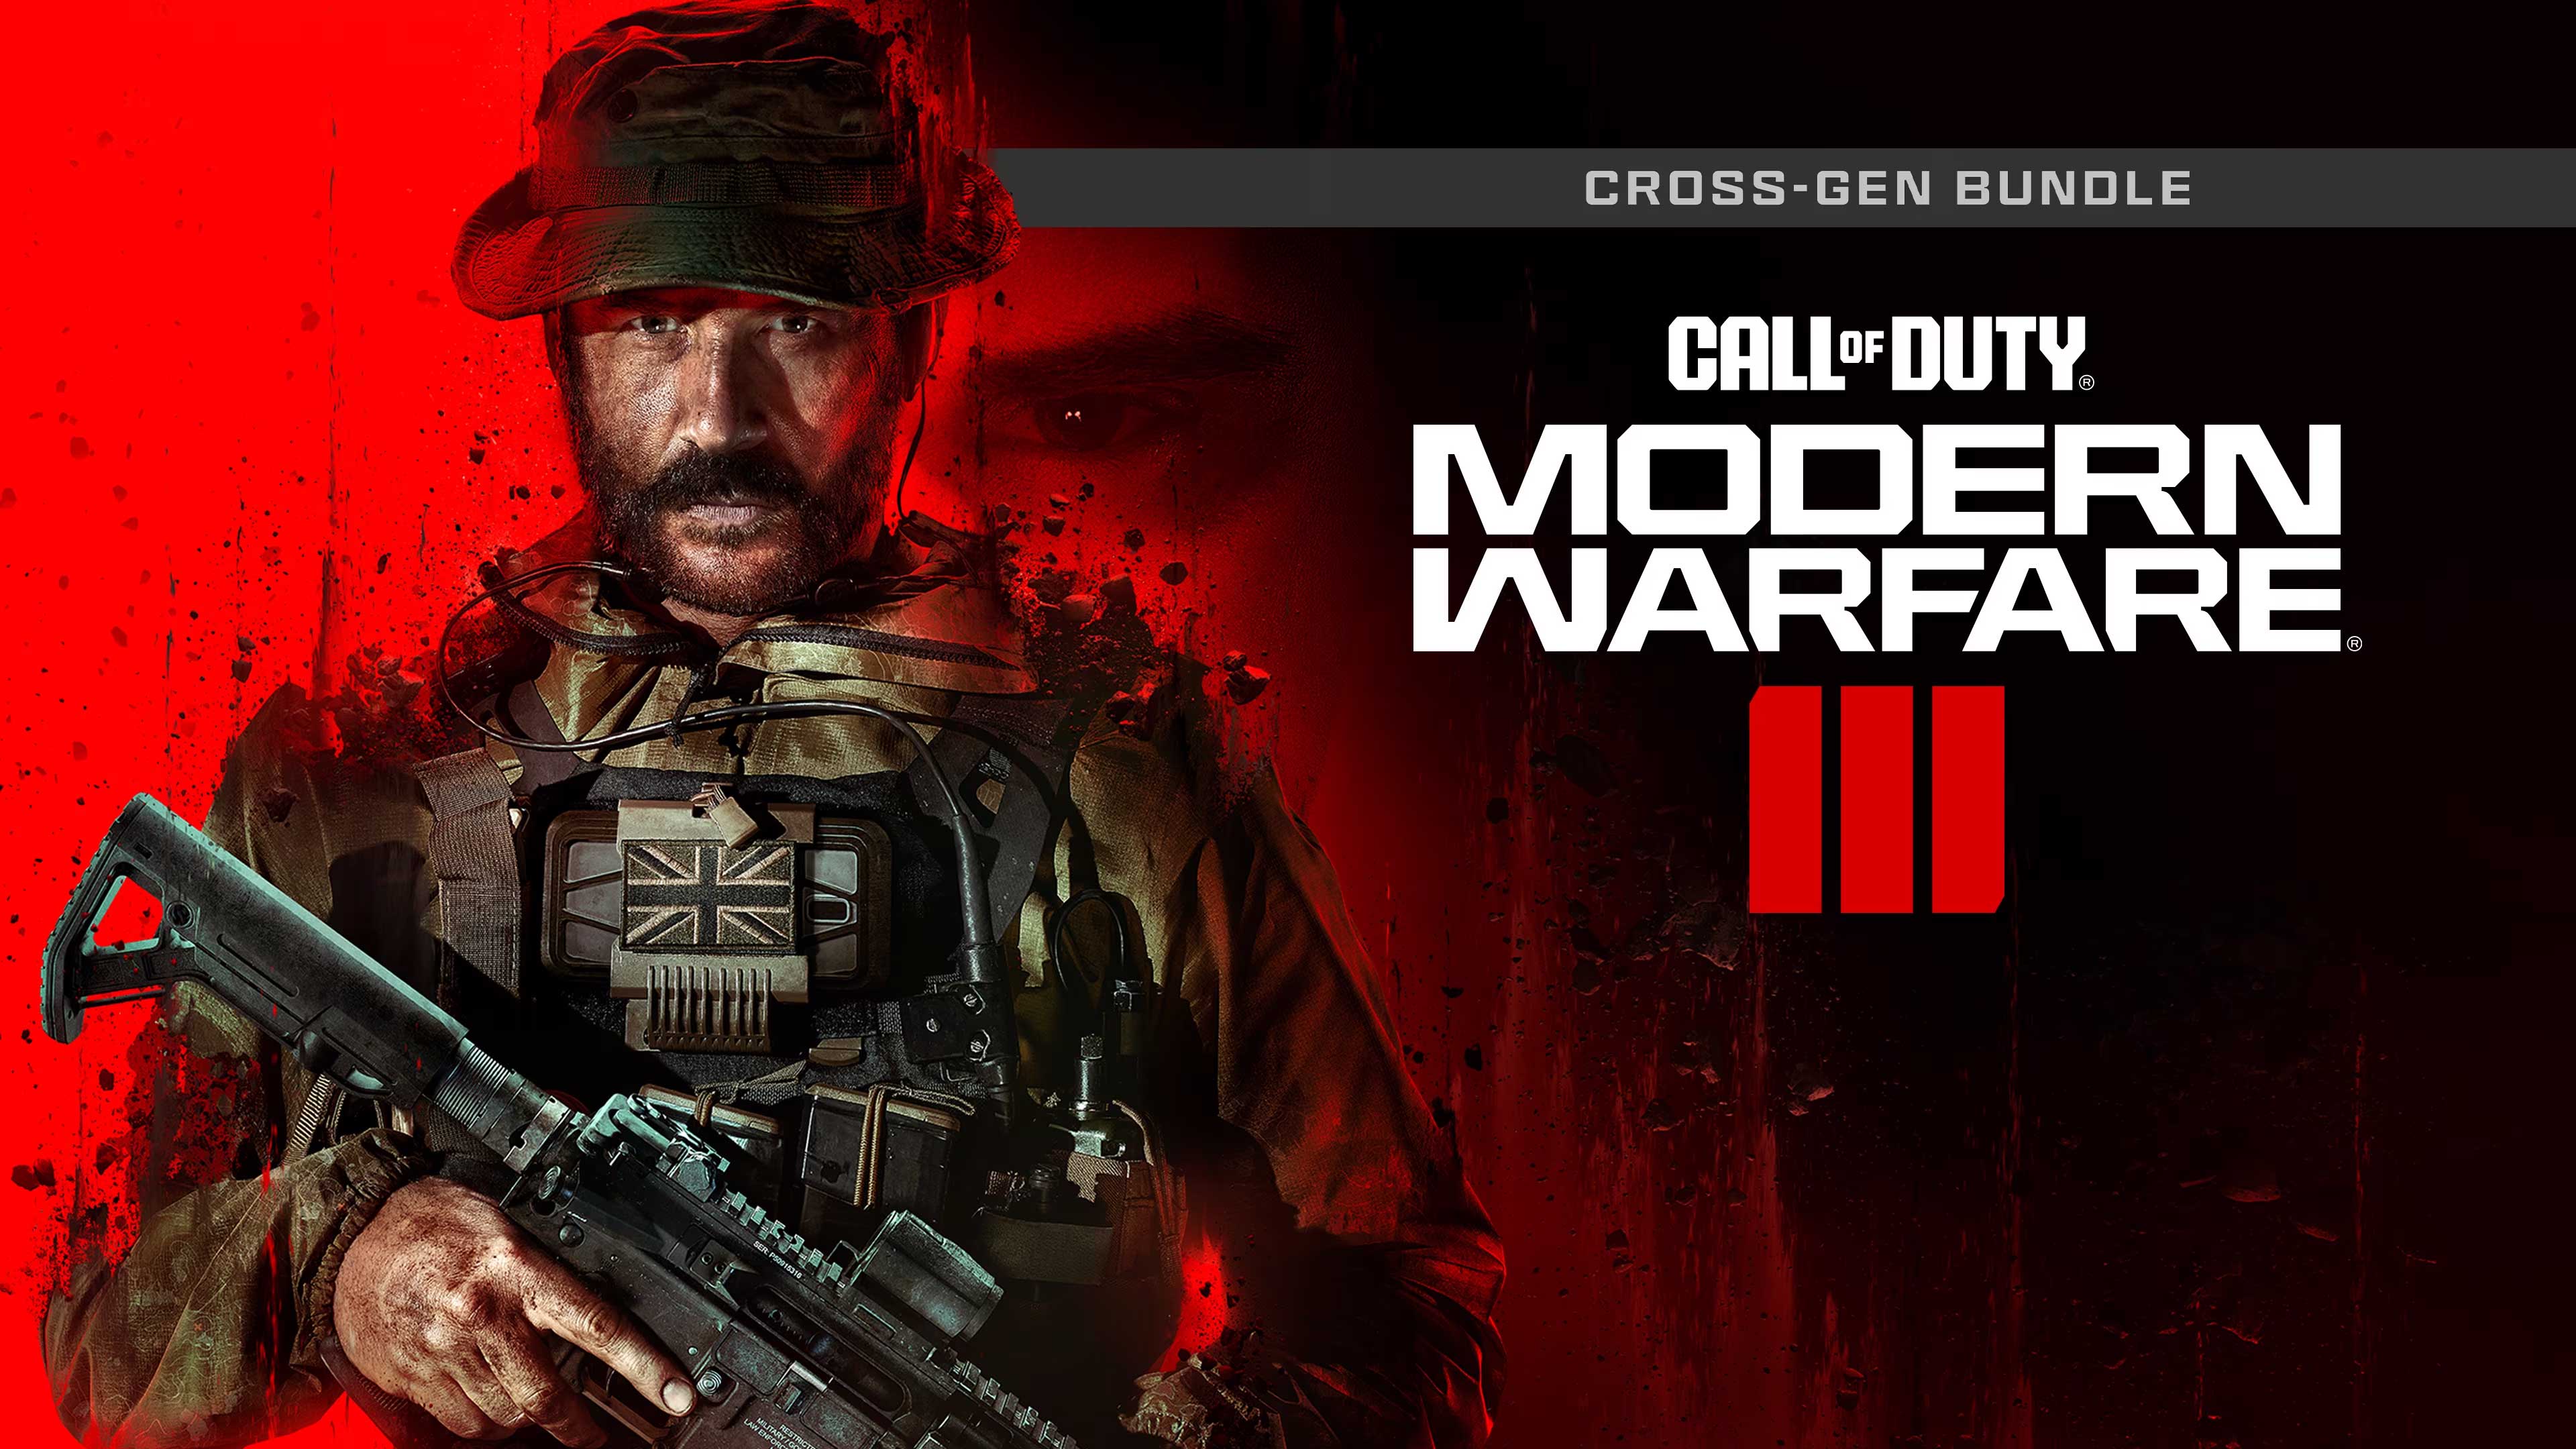 Call of Duty: Modern Warfare III - Cross-Gen Bundle, The Gamer Bro, thegamerbro.com